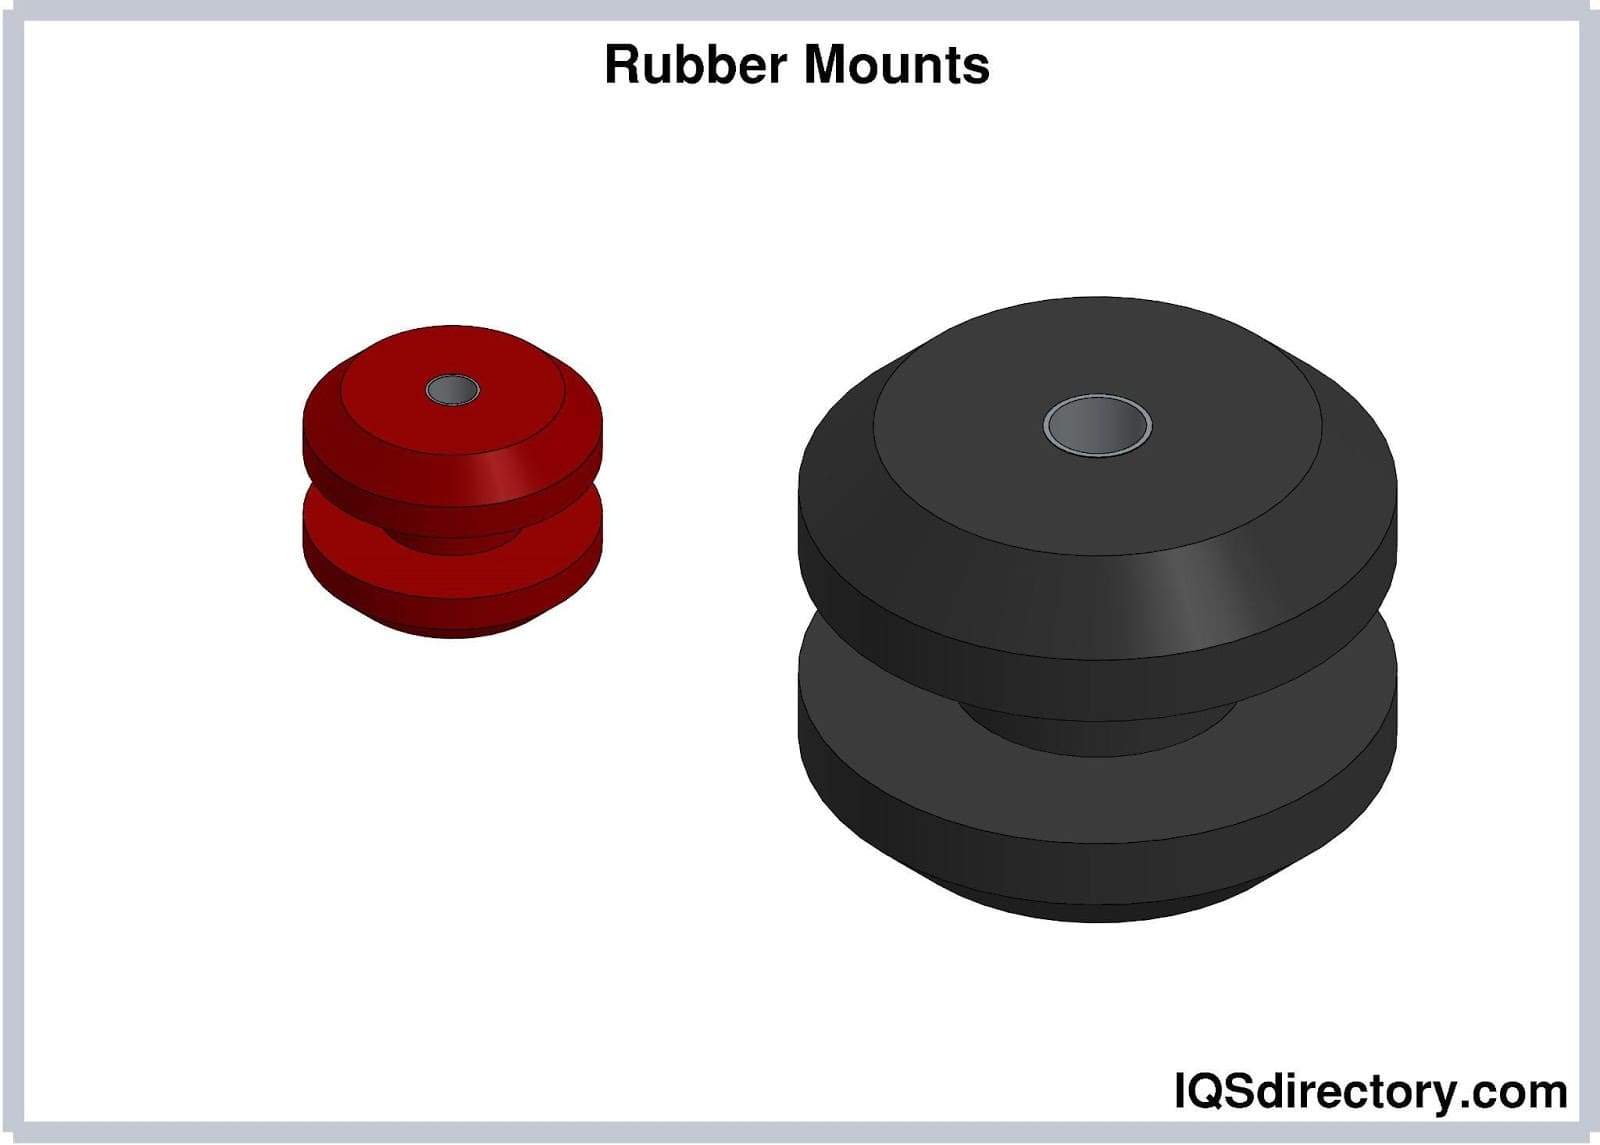 https://www.iqsdirectory.com/articles/rubber/rubber-molding/rubber-mounts.jpg